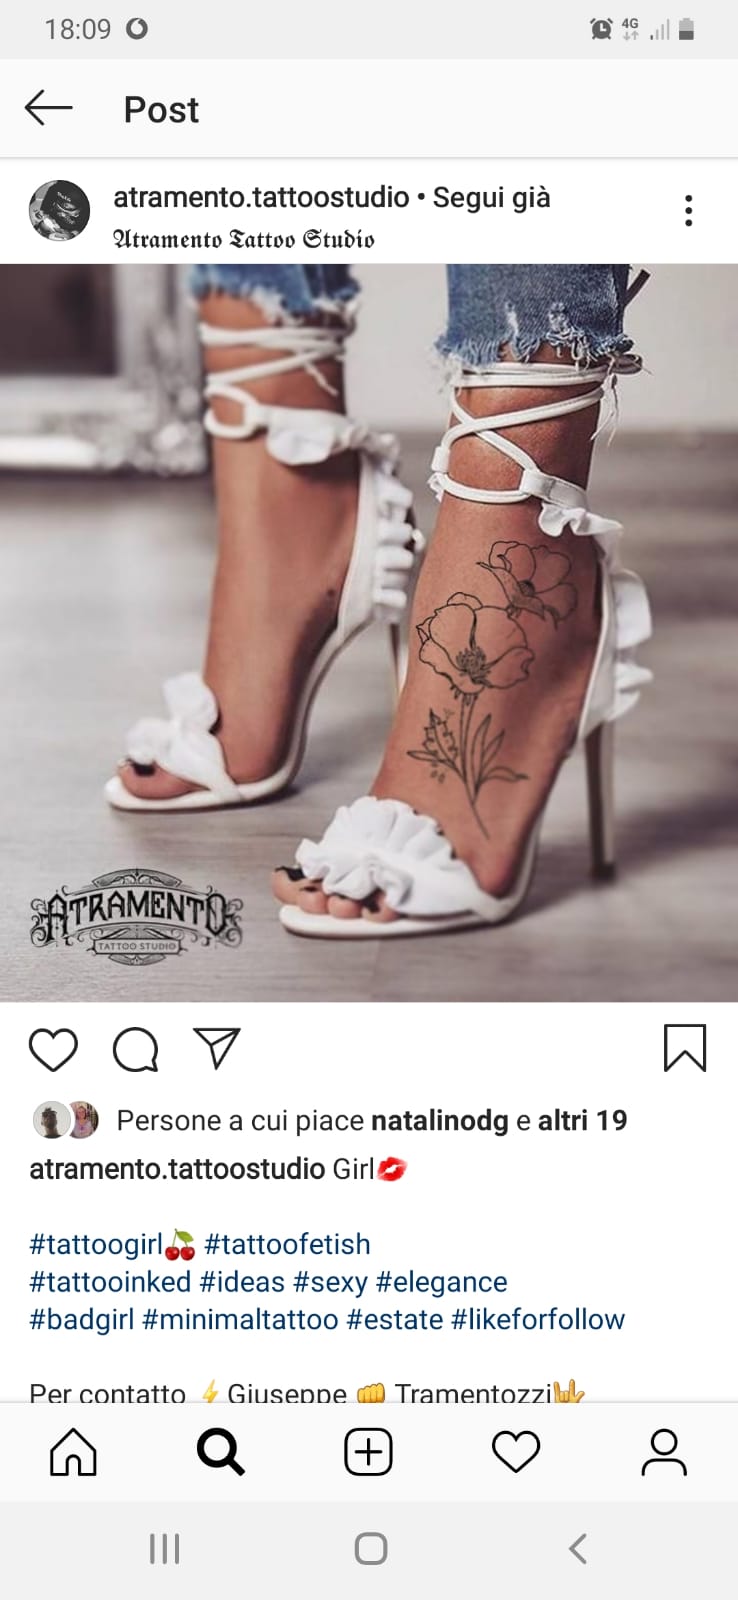 Tattoo Artist Giuseppe Tramentozzi